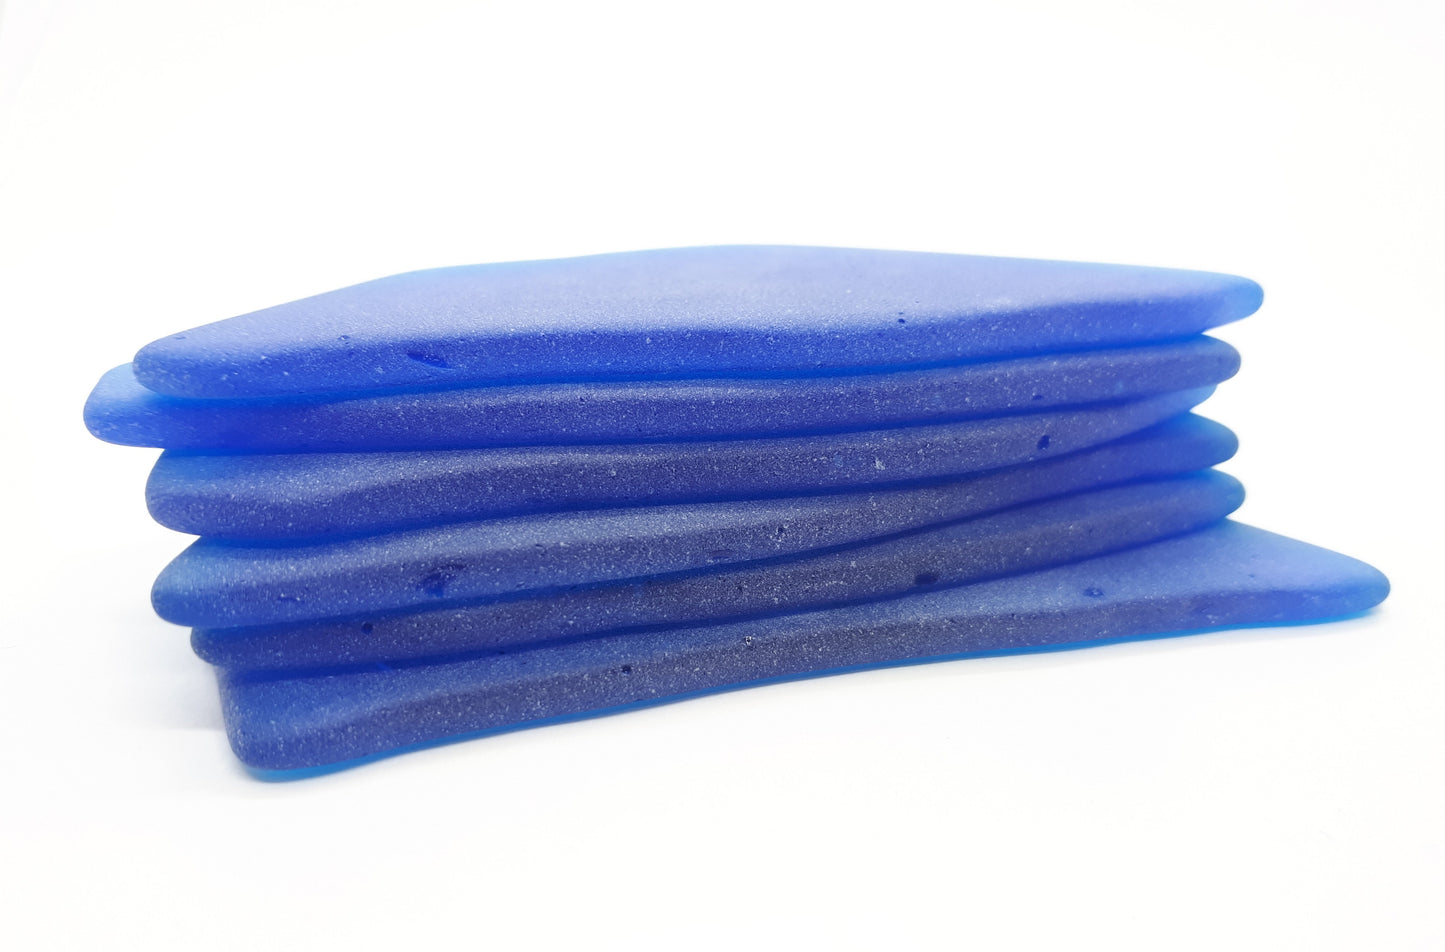 Cobalt blue sea glass place cards - Set of 20 tumble glass pieces - Irregular shapes